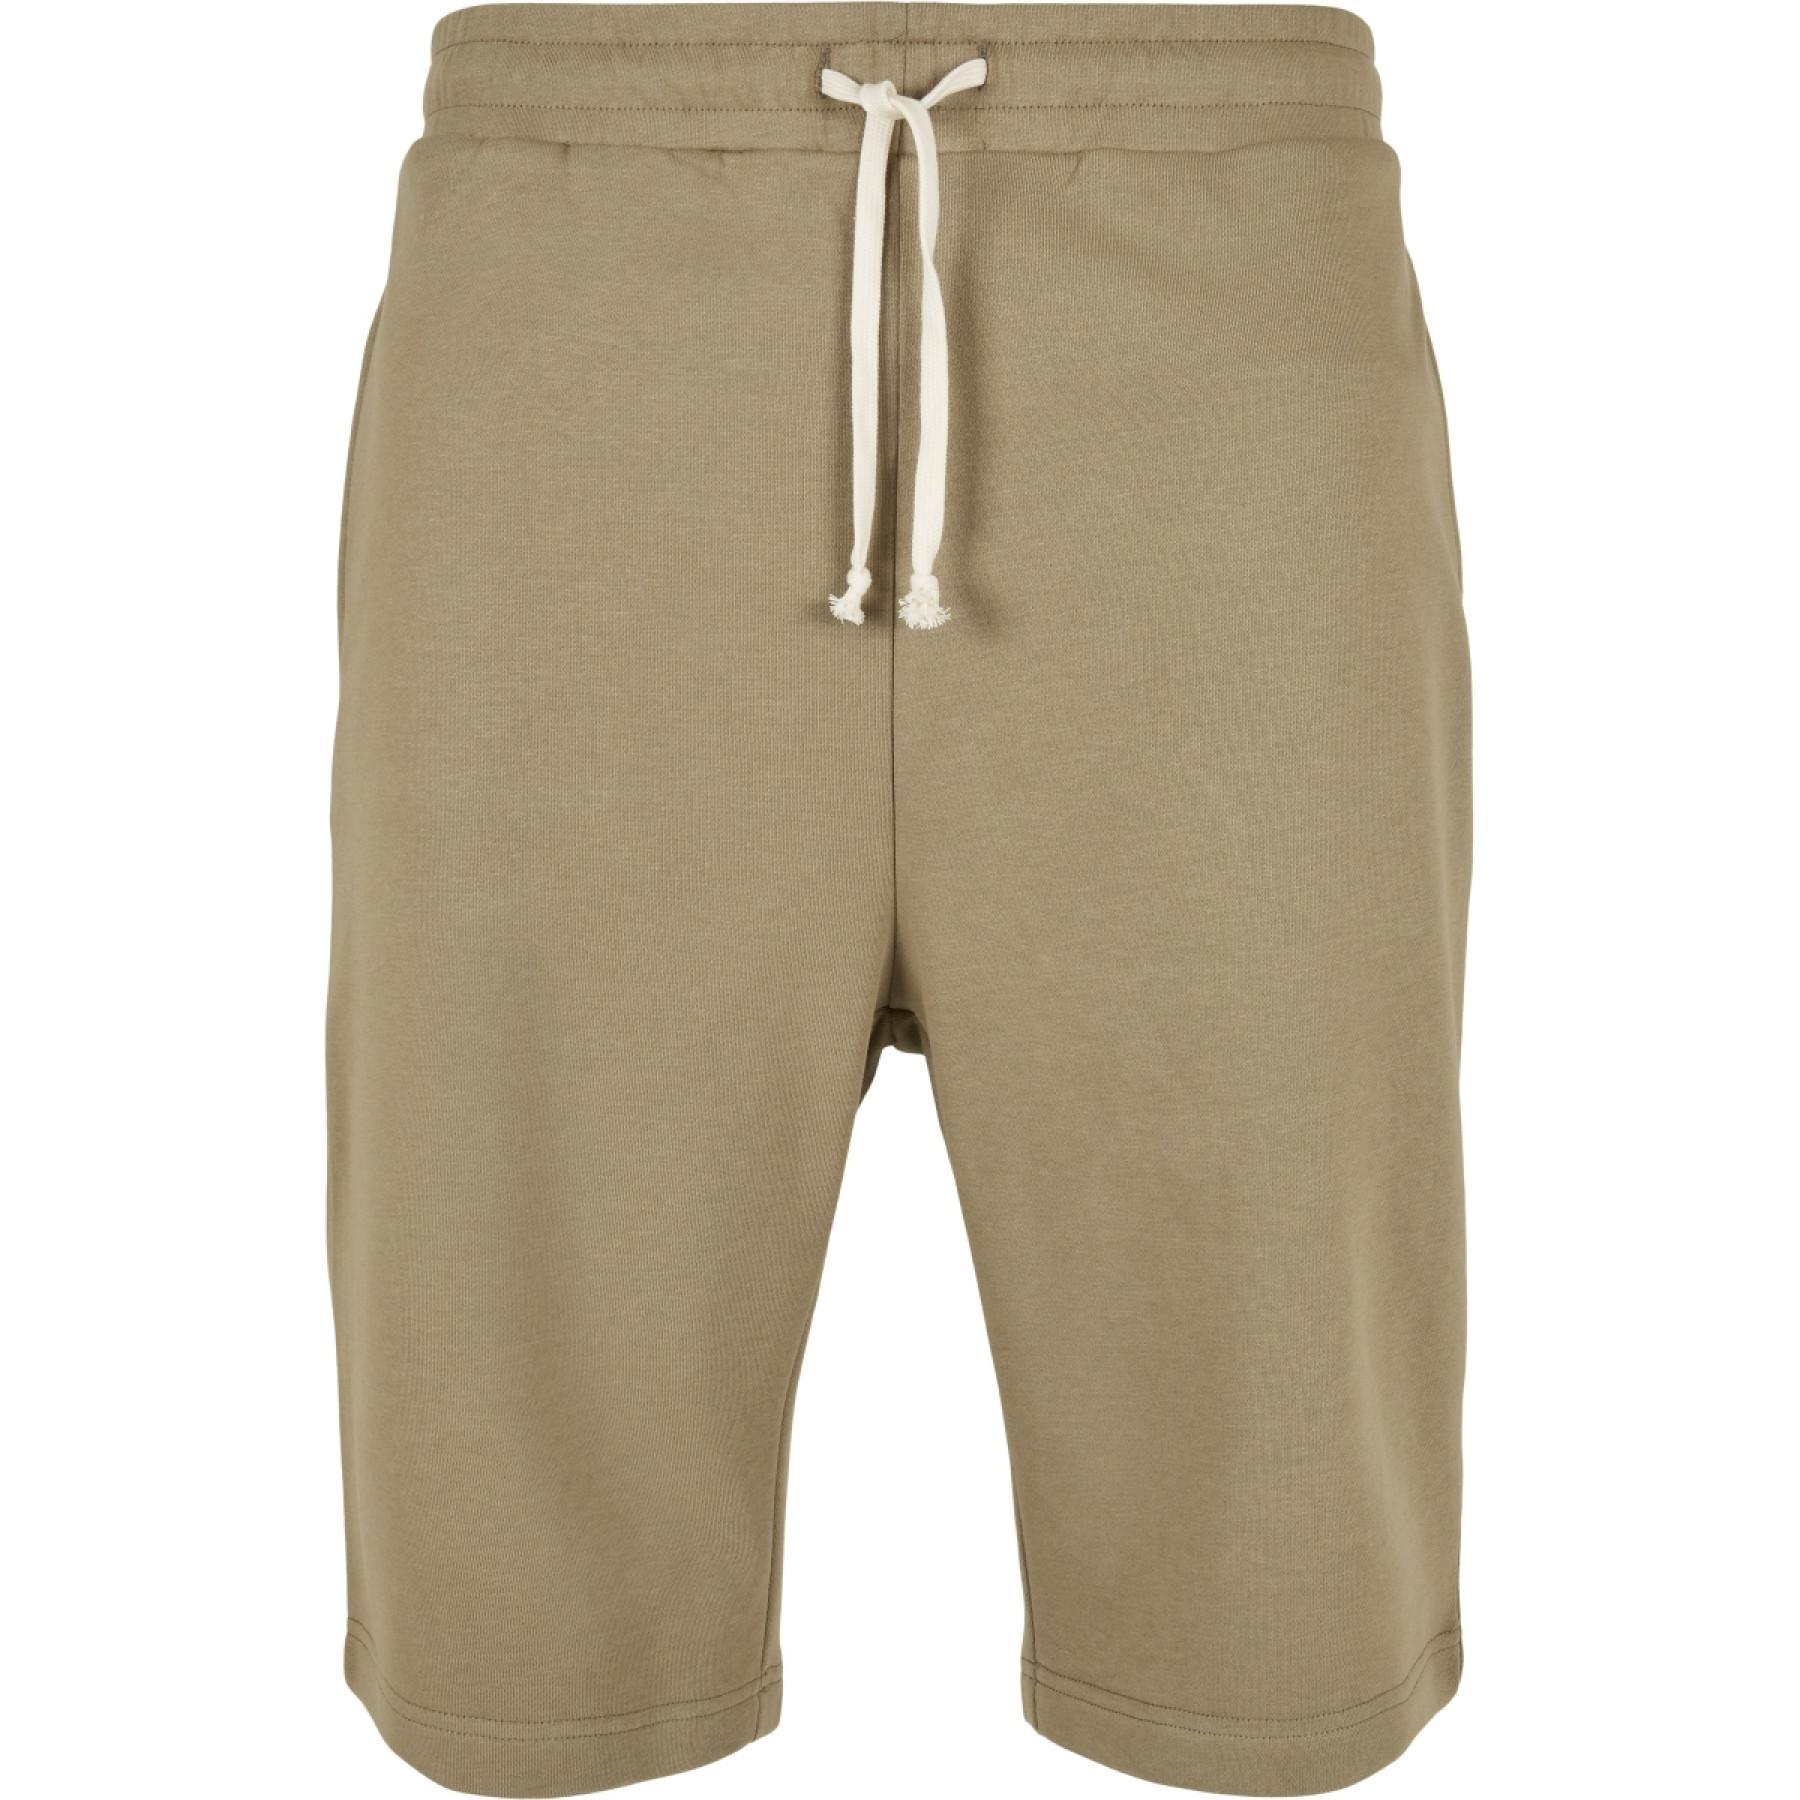 Shorts Urban Classics low crotch-grandes tailles